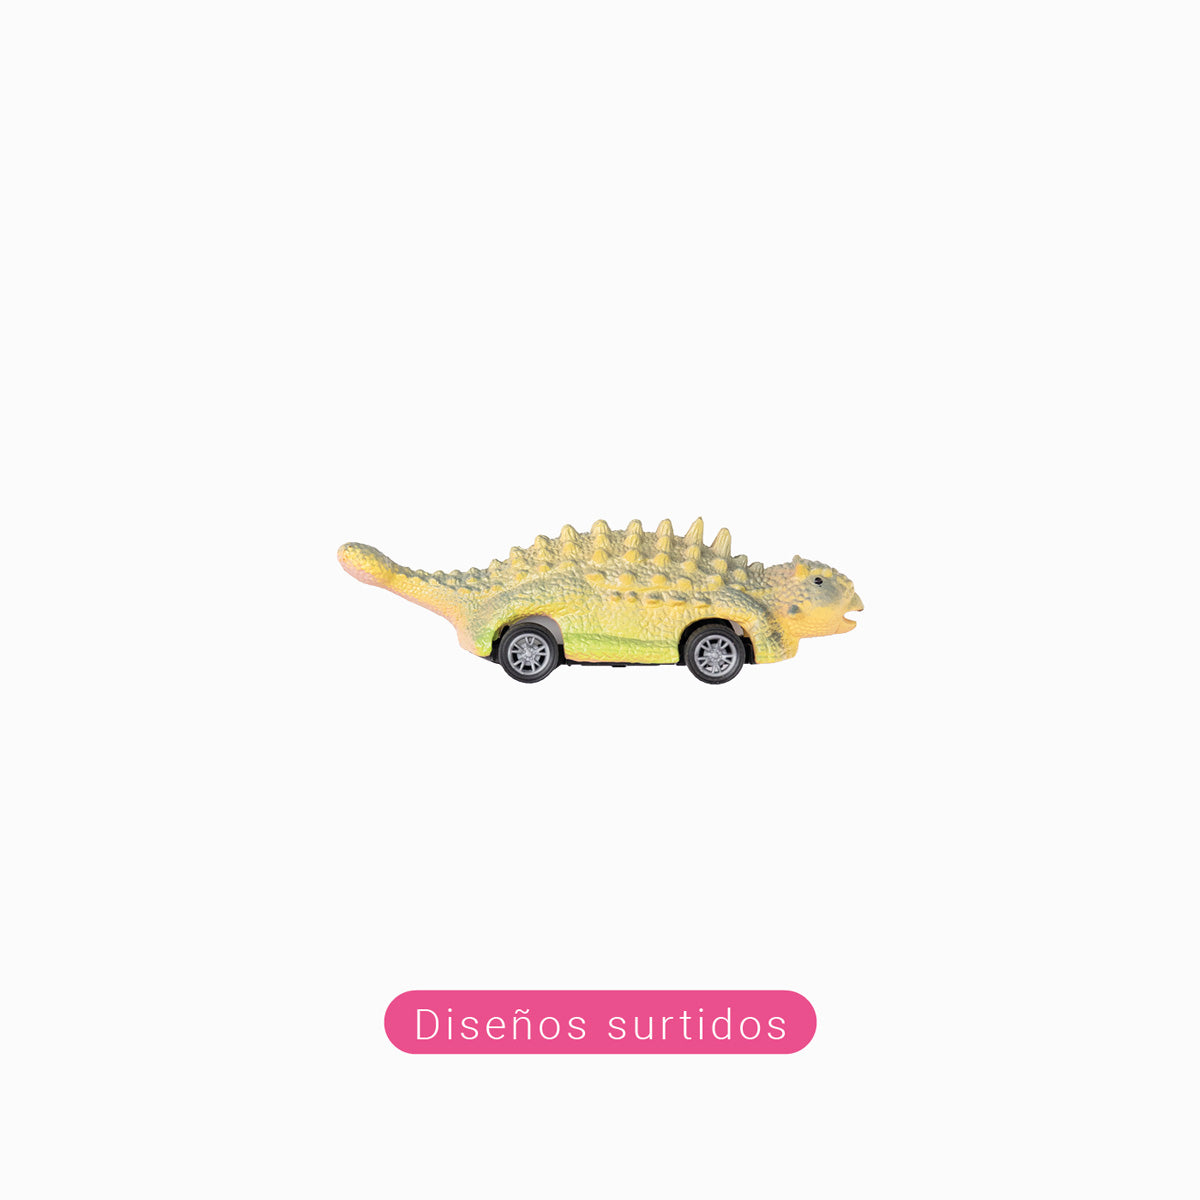 Designs de fornecedores de brinquedos de dinossauros piñata